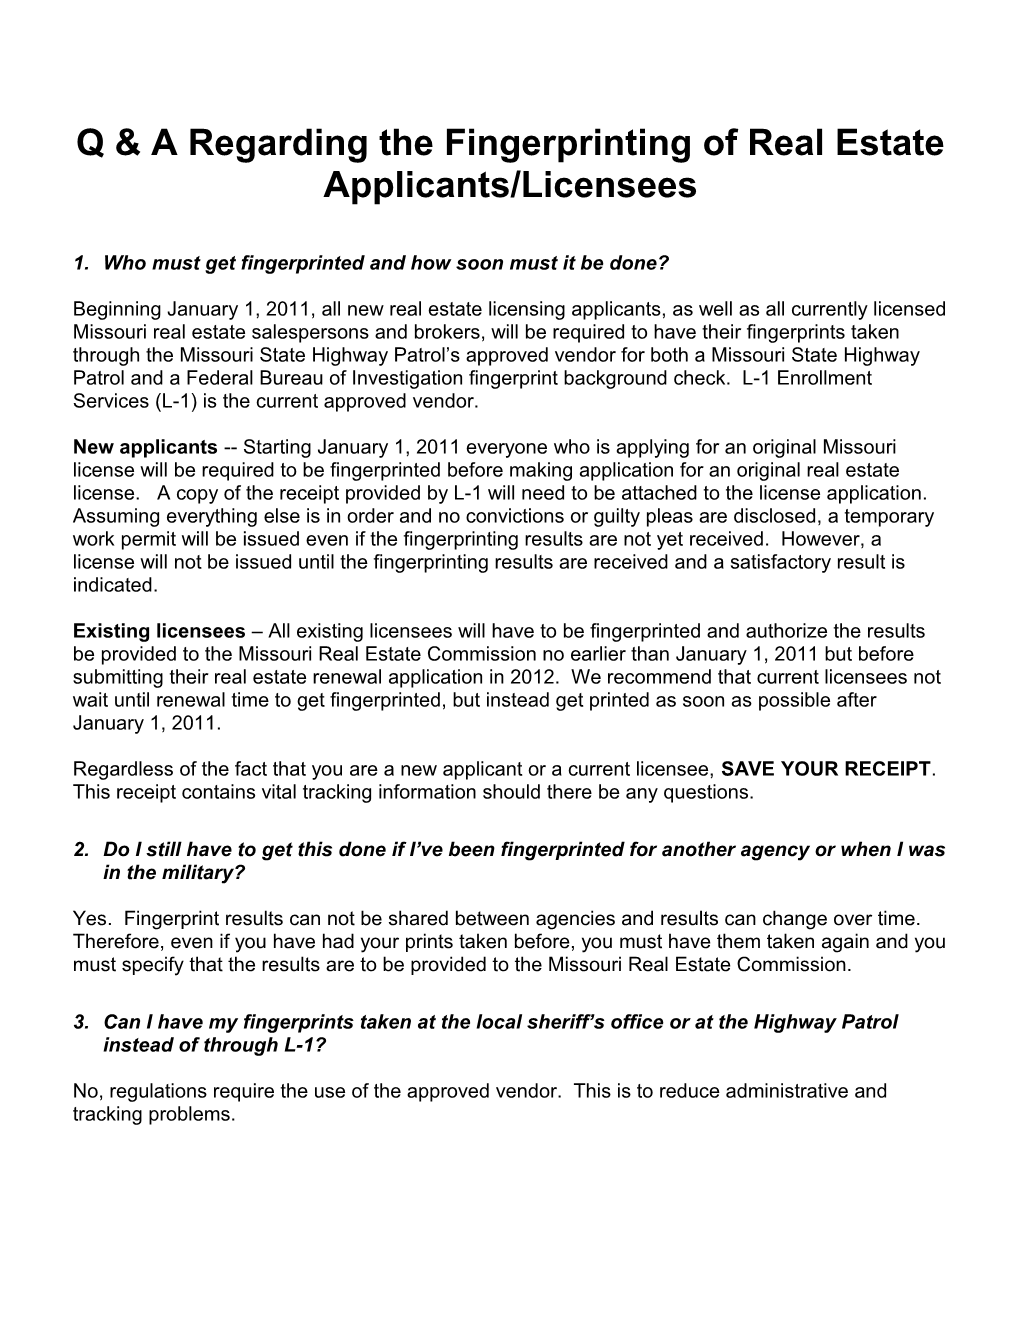 Q & a Regarding the Fingerprinting of Real Estate Applicants/Licensees